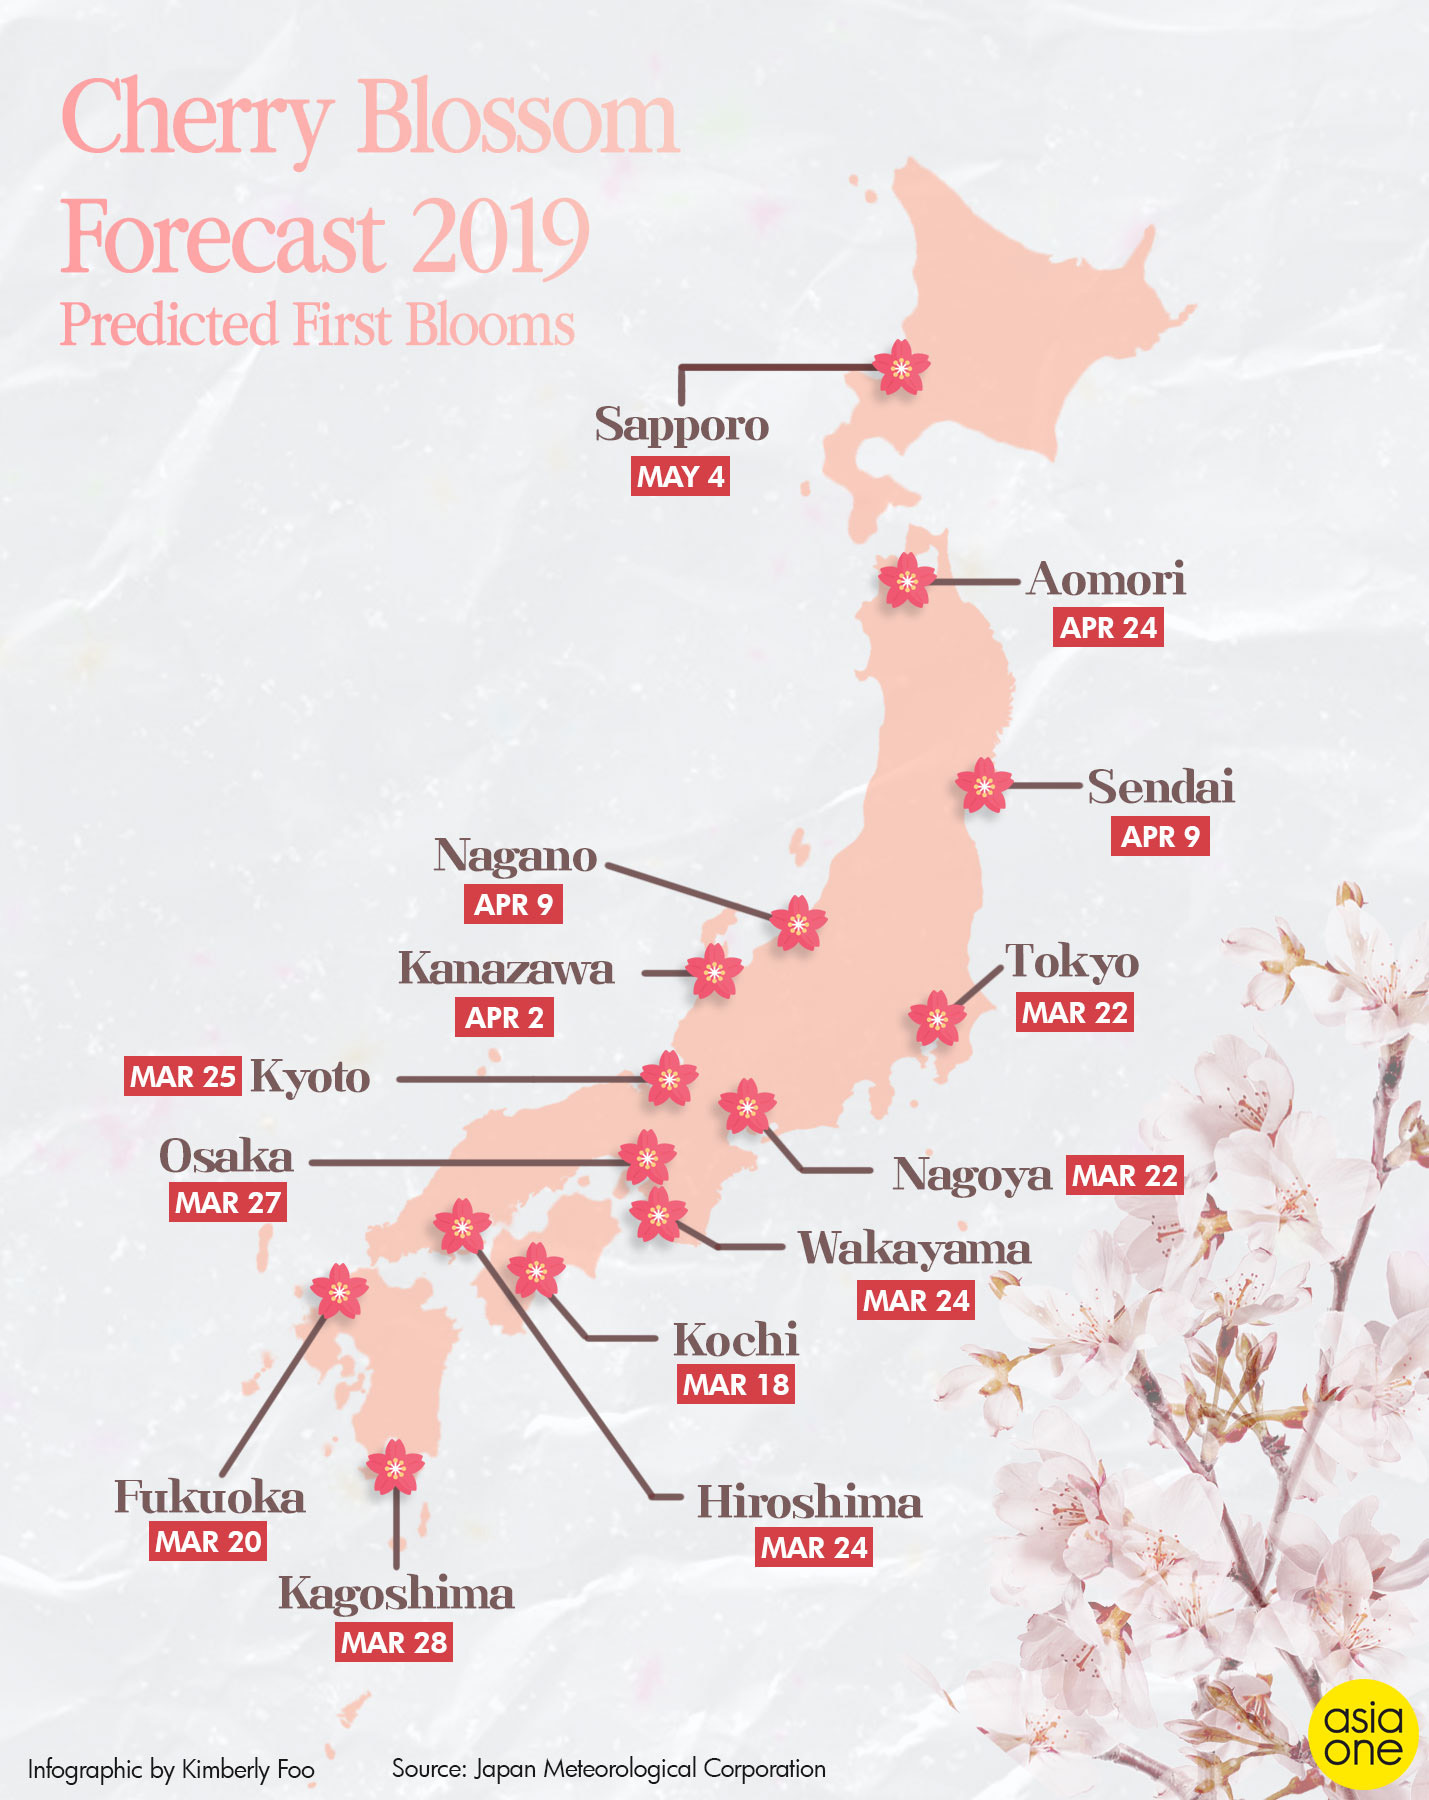 sakura-season-in-japan-forecast-to-start-earlier-this-year-from-mid